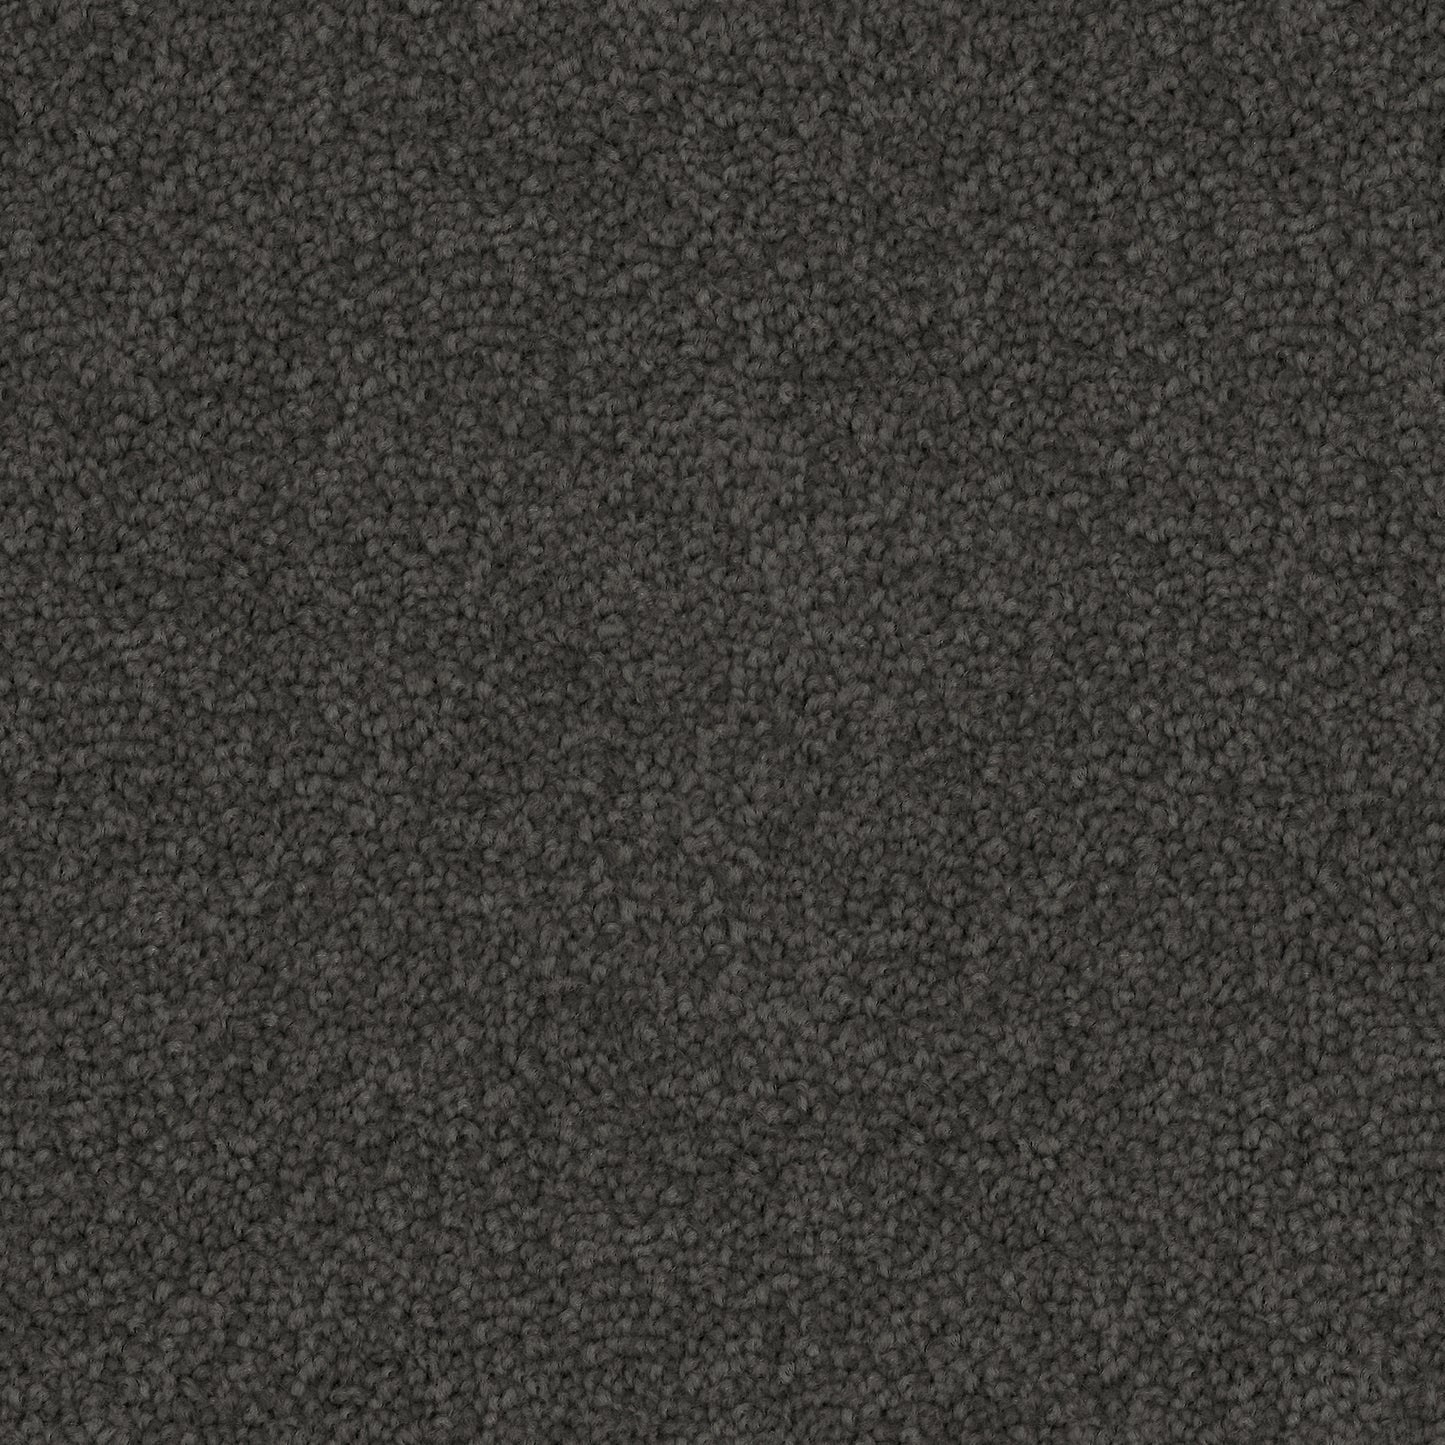 Poly25 Polyester Carpet Urban Grey